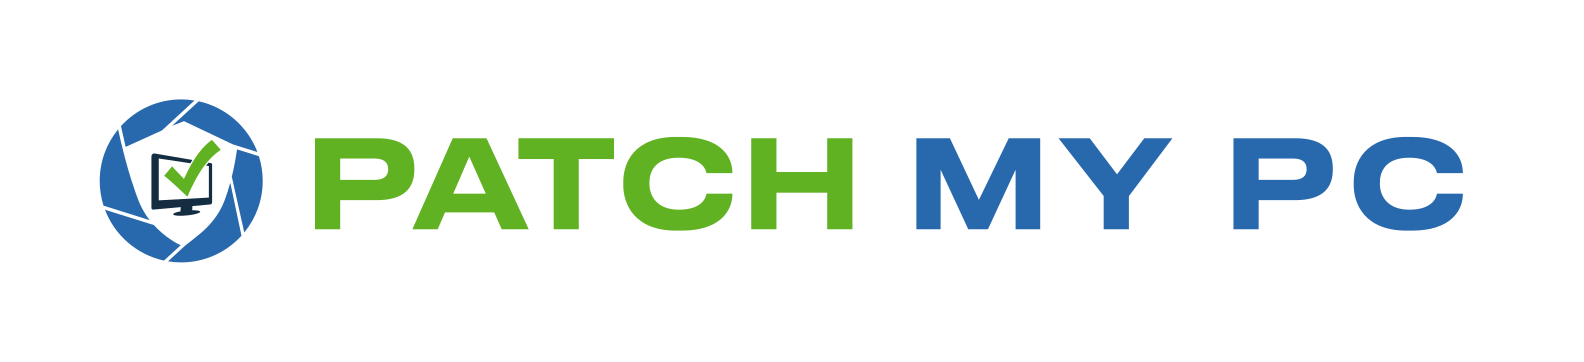 Patch My PC Logo